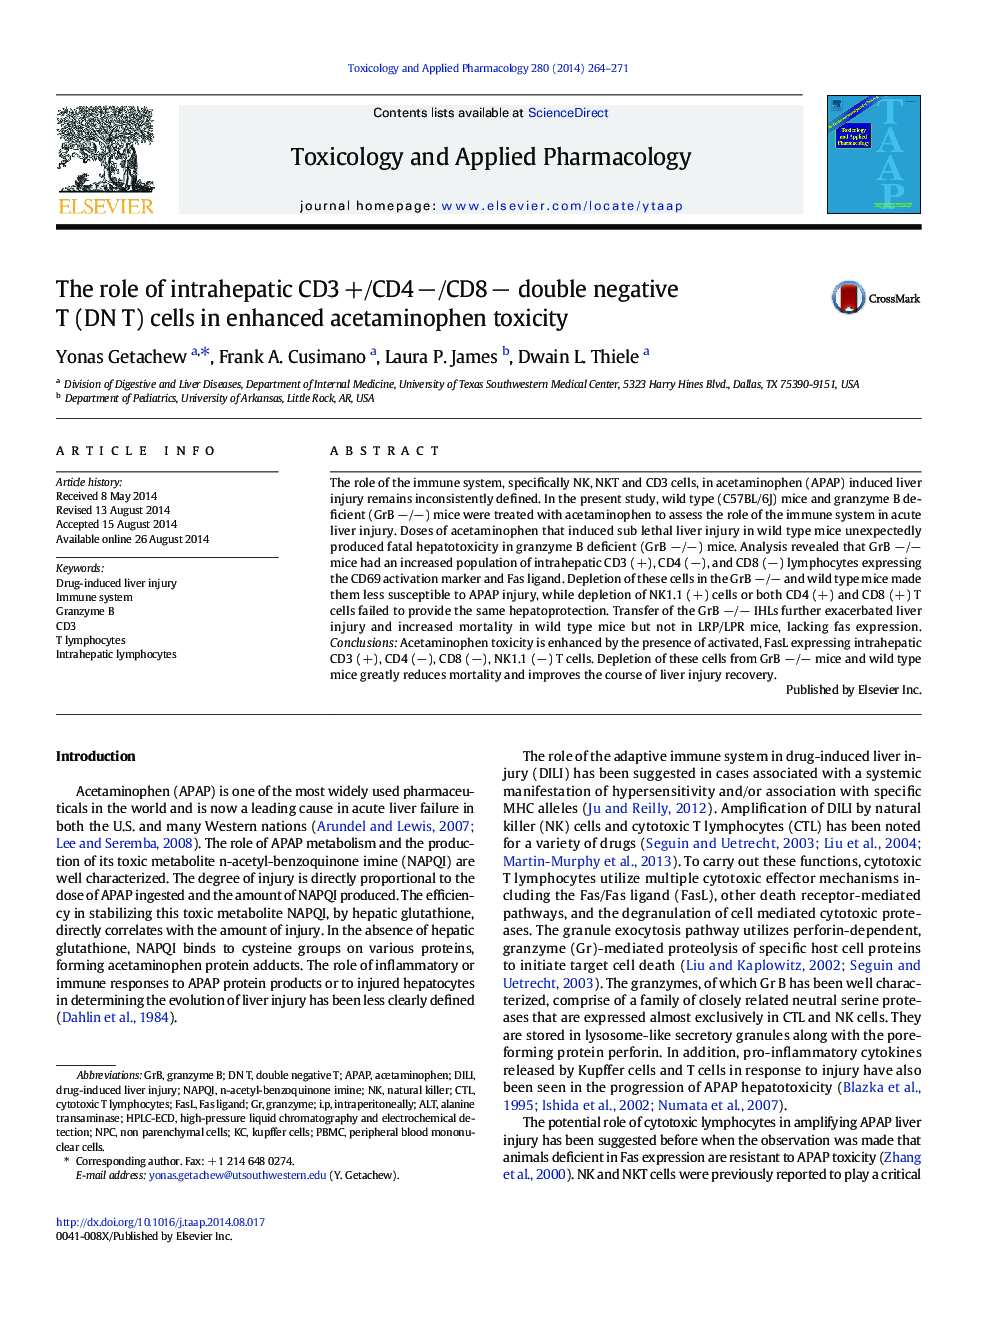 The role of intrahepatic CD3Â +/CD4Â â/CD8Â â double negative T (DN T) cells in enhanced acetaminophen toxicity